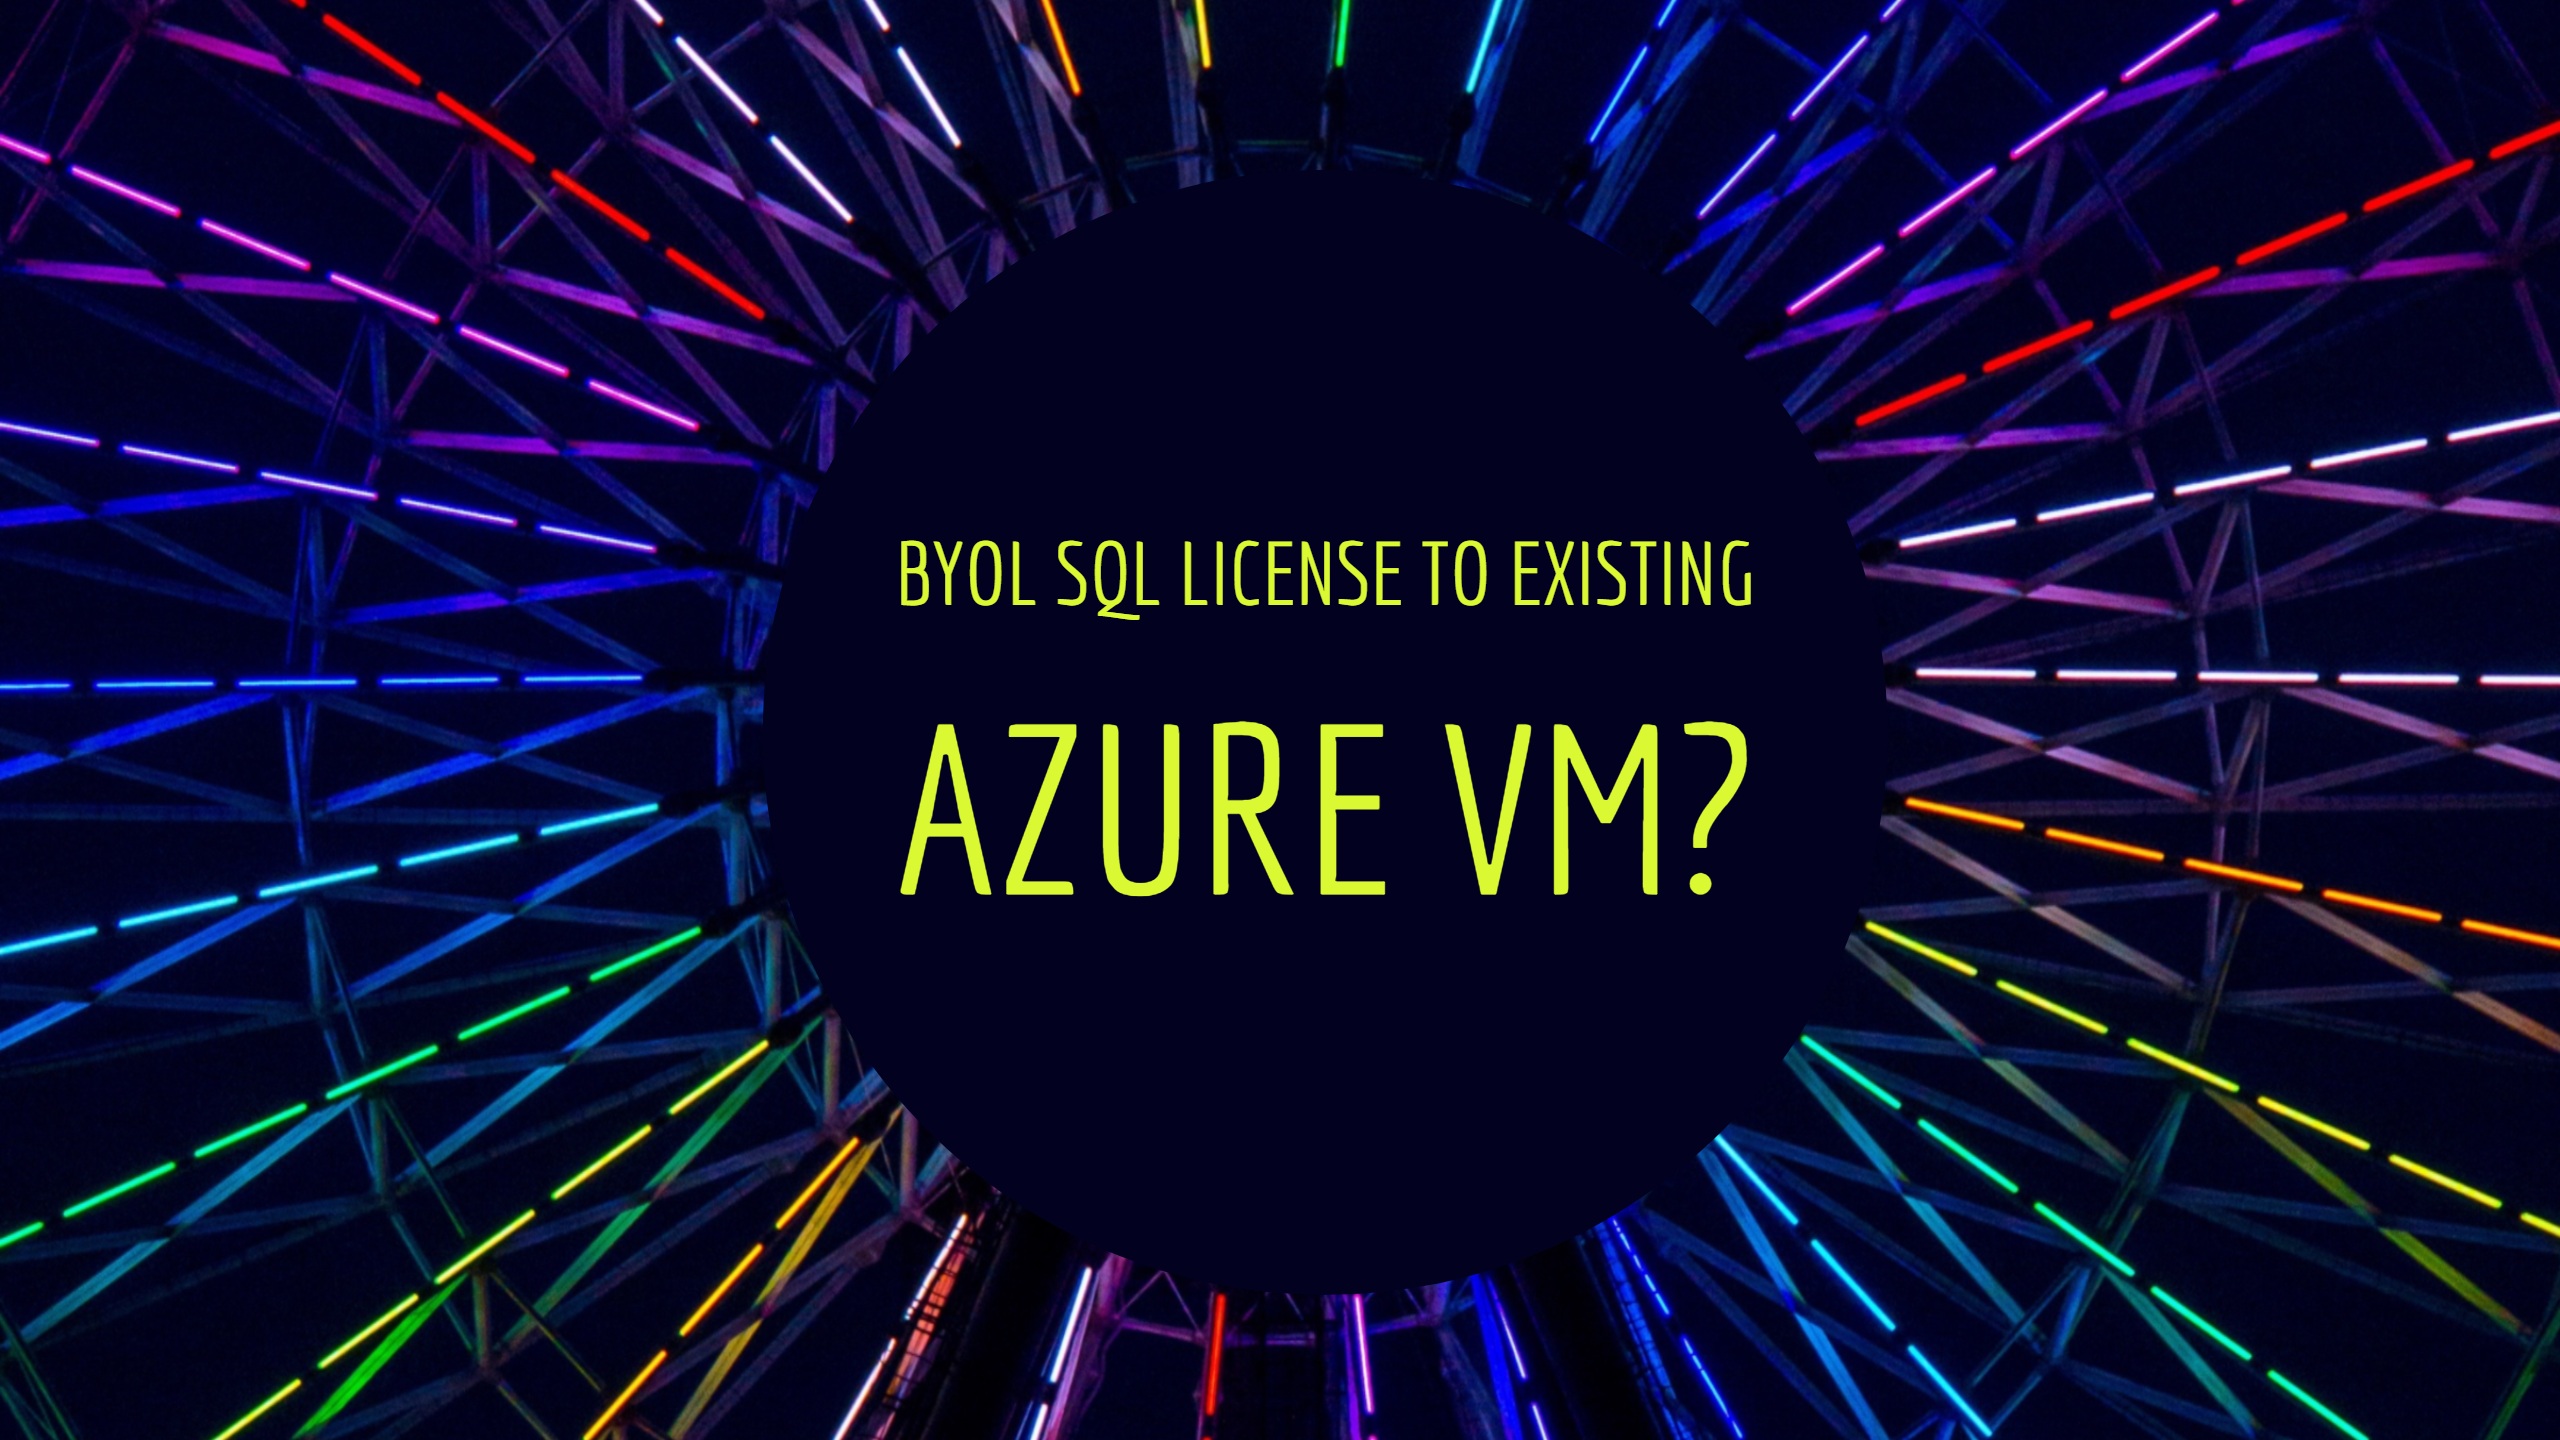 BYOL SQL License to Existing Azure VM